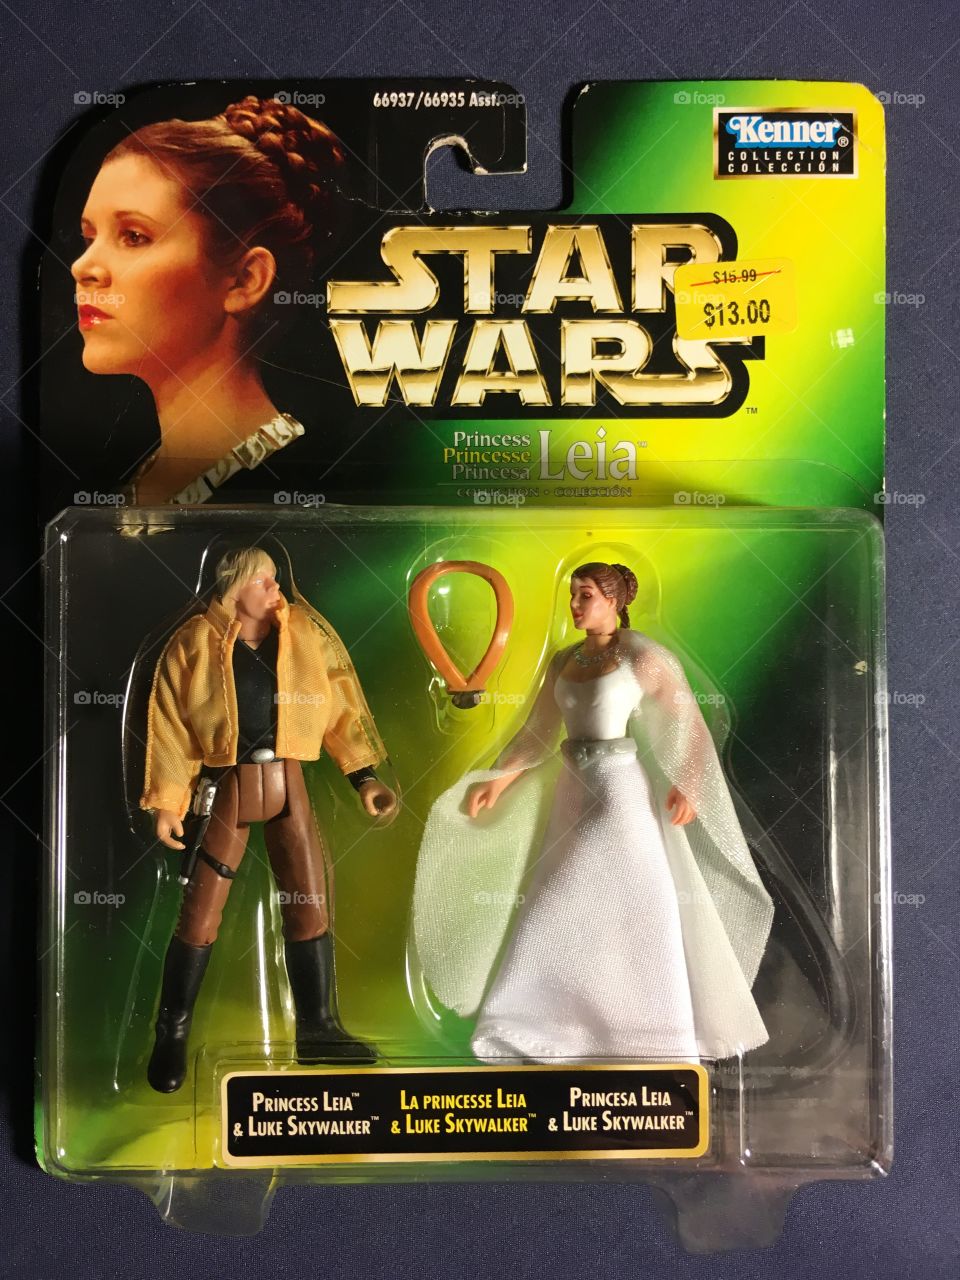 Star Wars - Princess Leia and Luke Skywalker. 
Action Figure 
Released - 1997